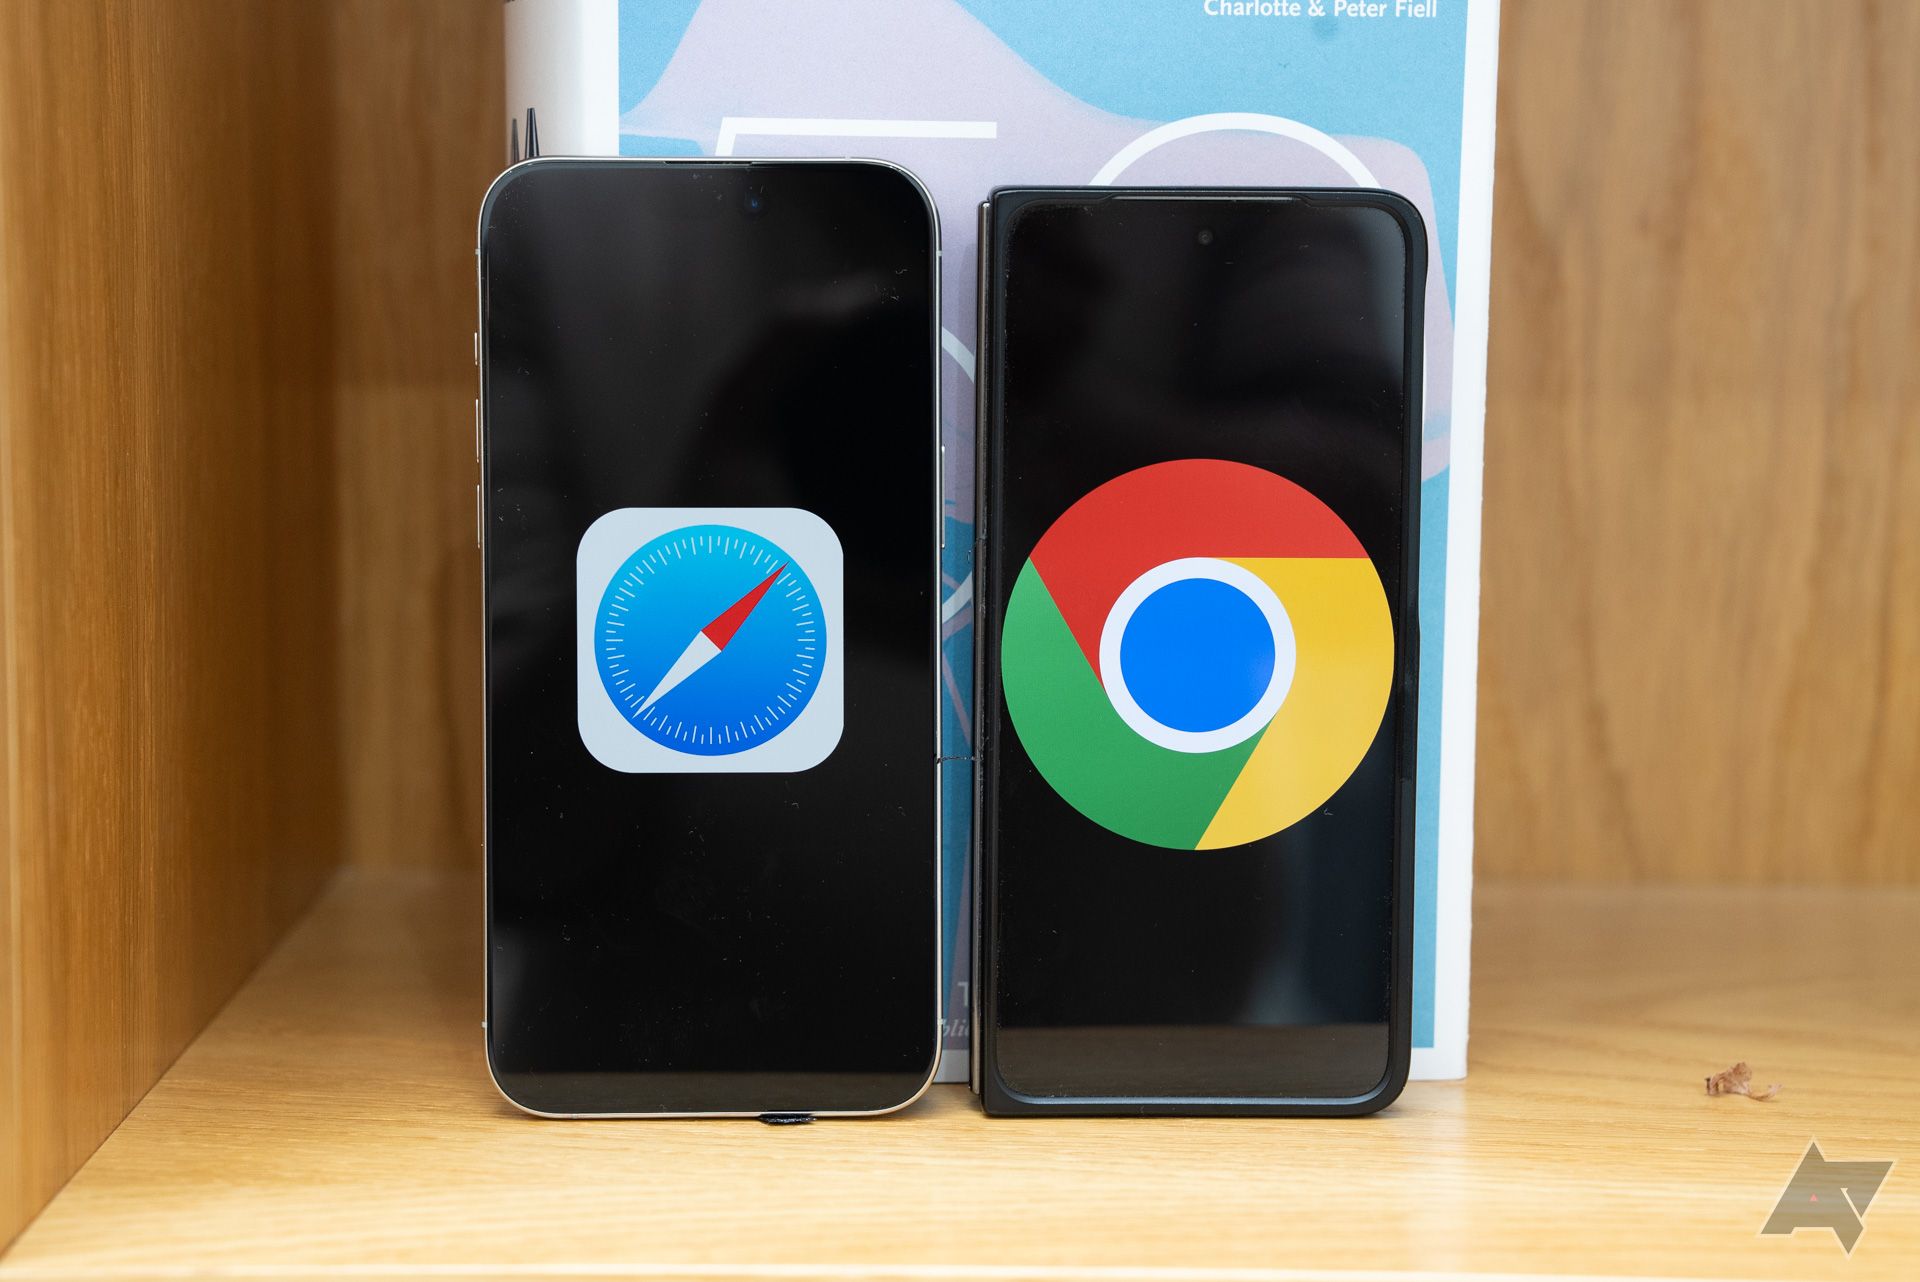 O iPhone e o OnePlus Open mostrando os logotipos do Safari e do Chrome.